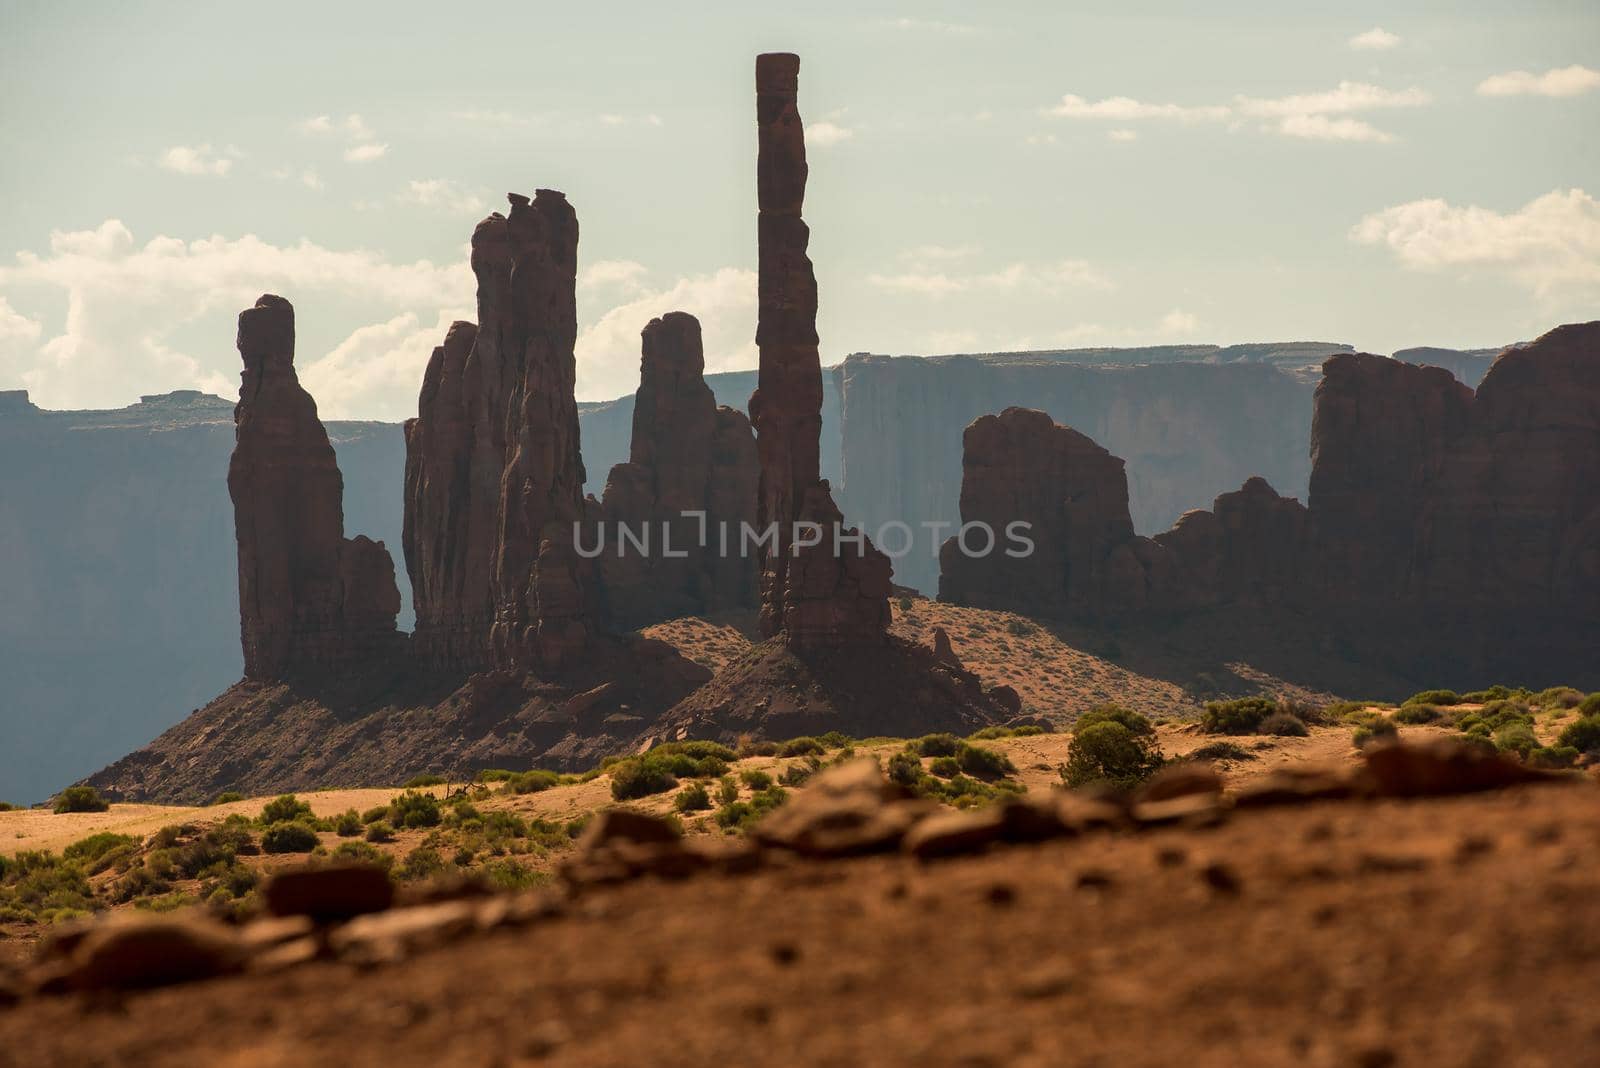 Utah W large buttes in western scene in Moab Utah by jyurinko